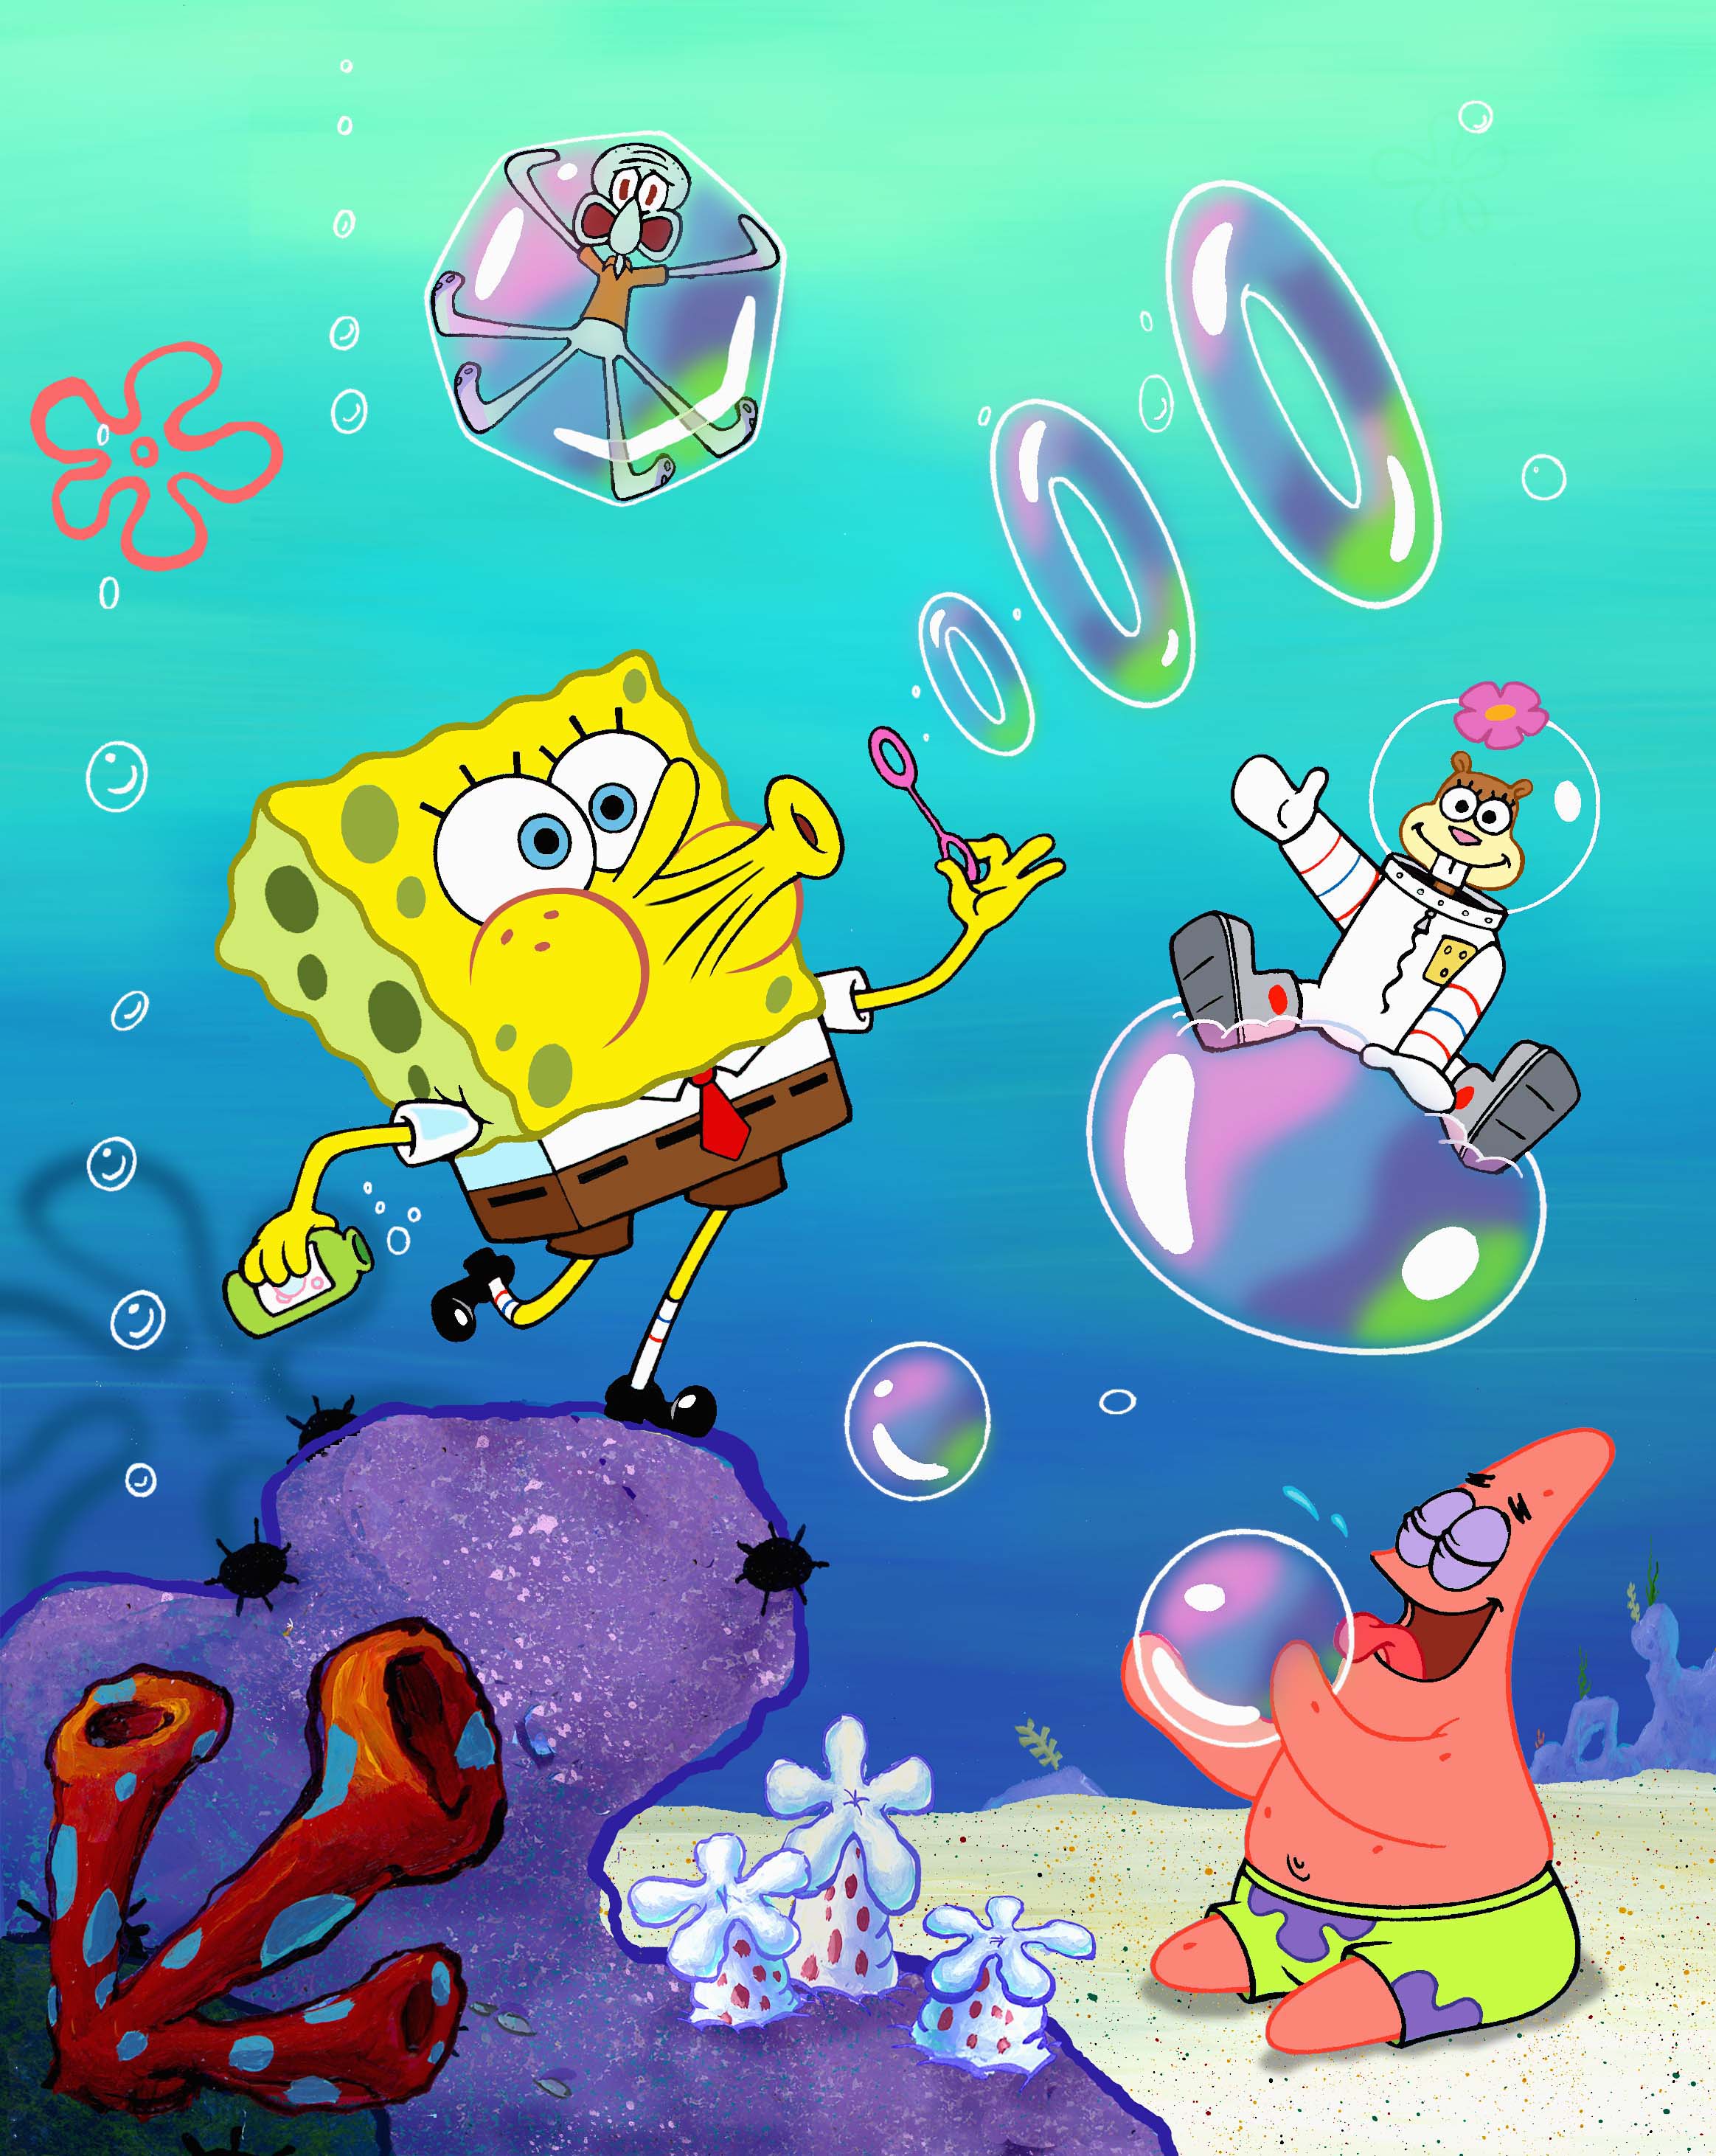 spongebob squarepants Photo: Spongebob.